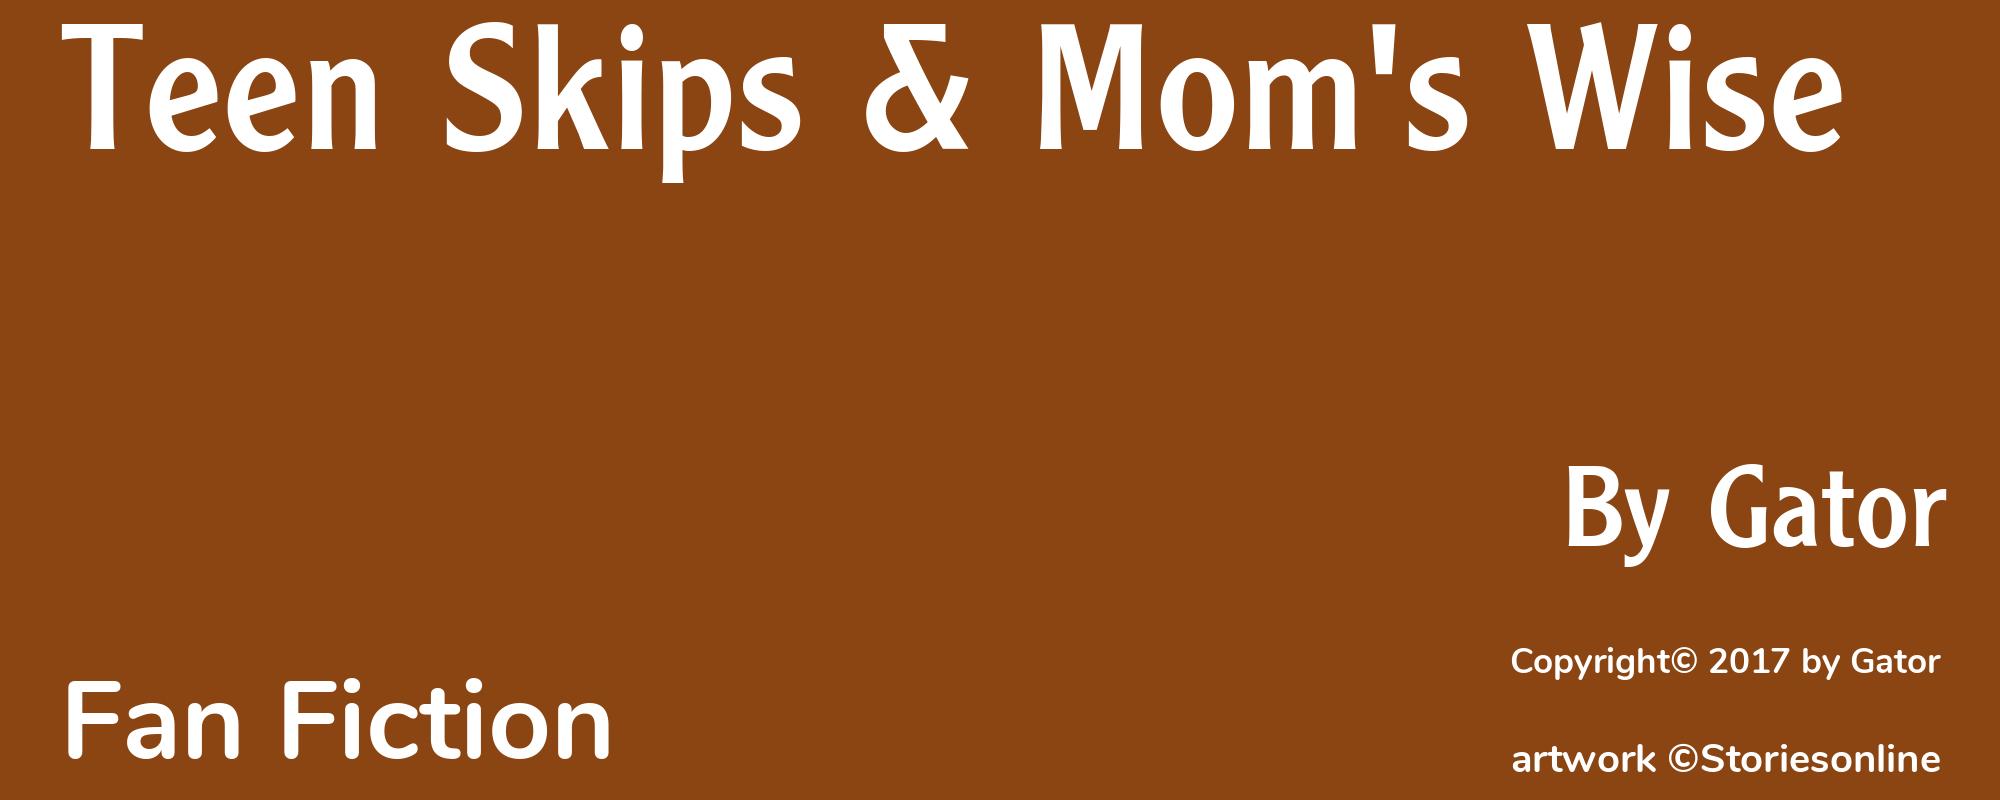 Teen Skips & Mom's Wise - Cover